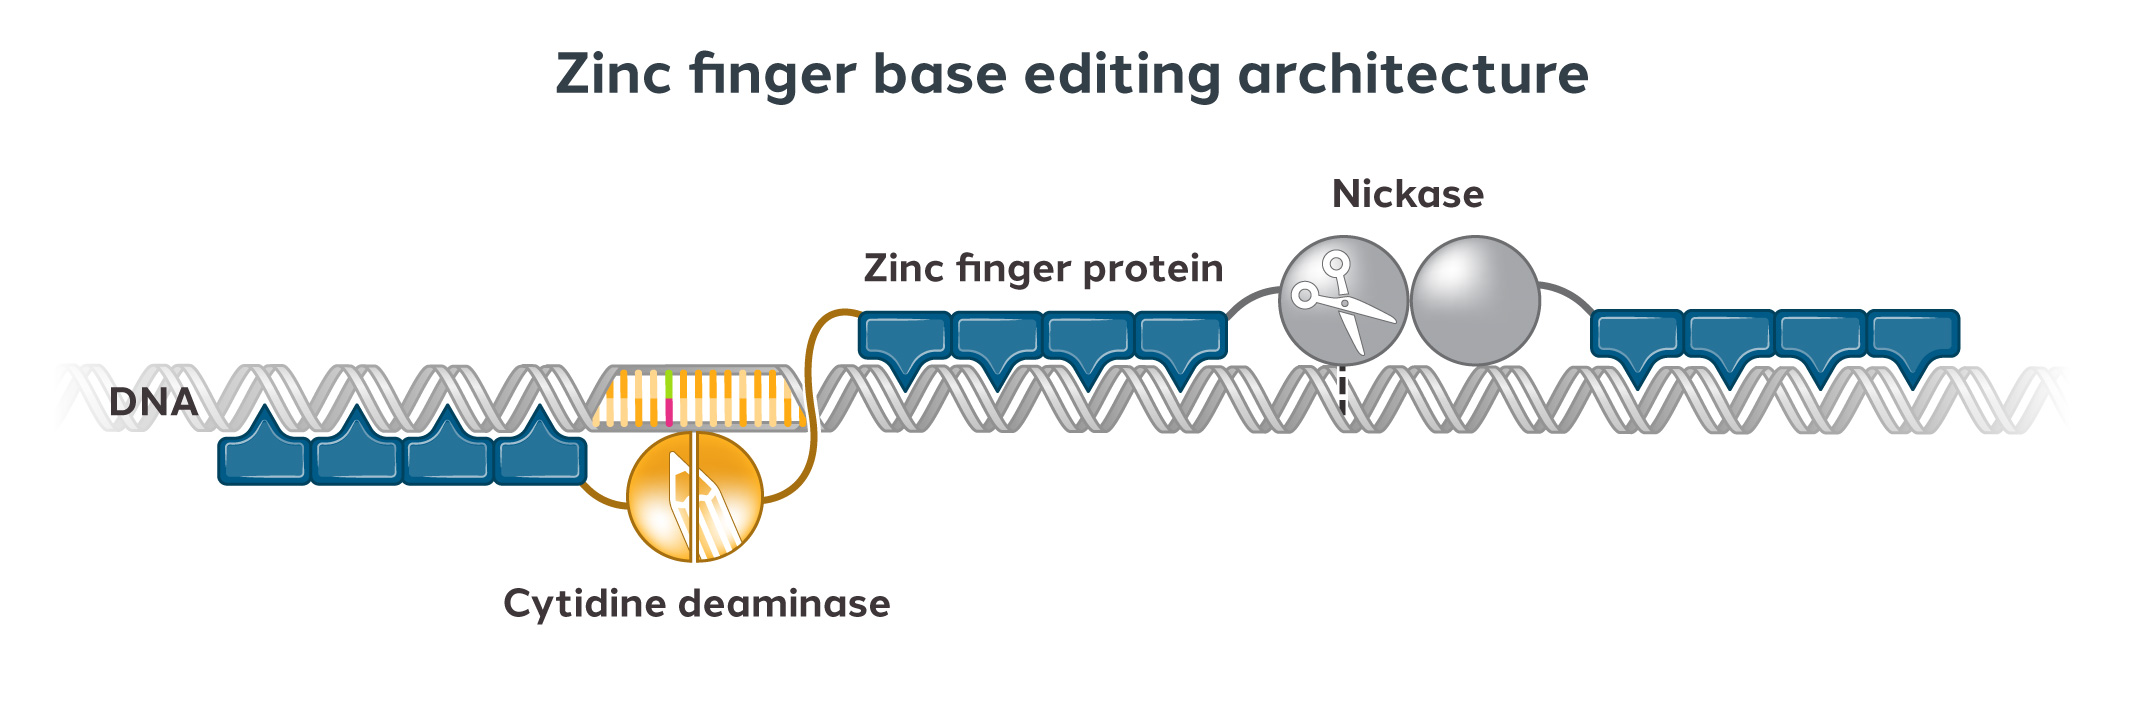 Zinc finger base editing architecture